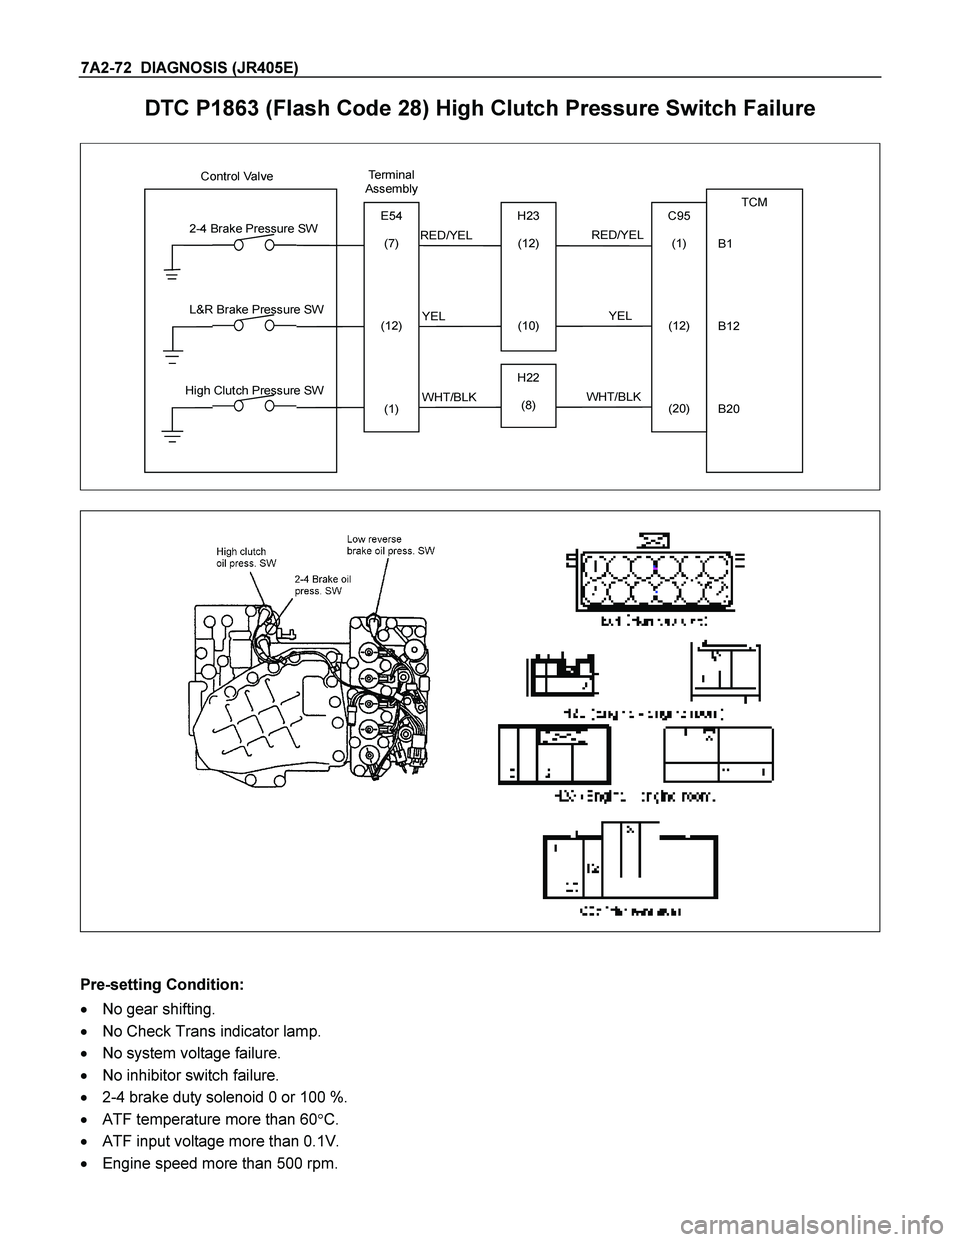 ISUZU TF SERIES 2004  Workshop Manual 7A2-72  DIAGNOSIS (JR405E)  
DTC P1863 (Flash Code 28) High Clutch Pressure Switch Failure 
  
 
 
       Control Valve
               
                                        TCM 
B1 
B12 
B20 
RED/Y